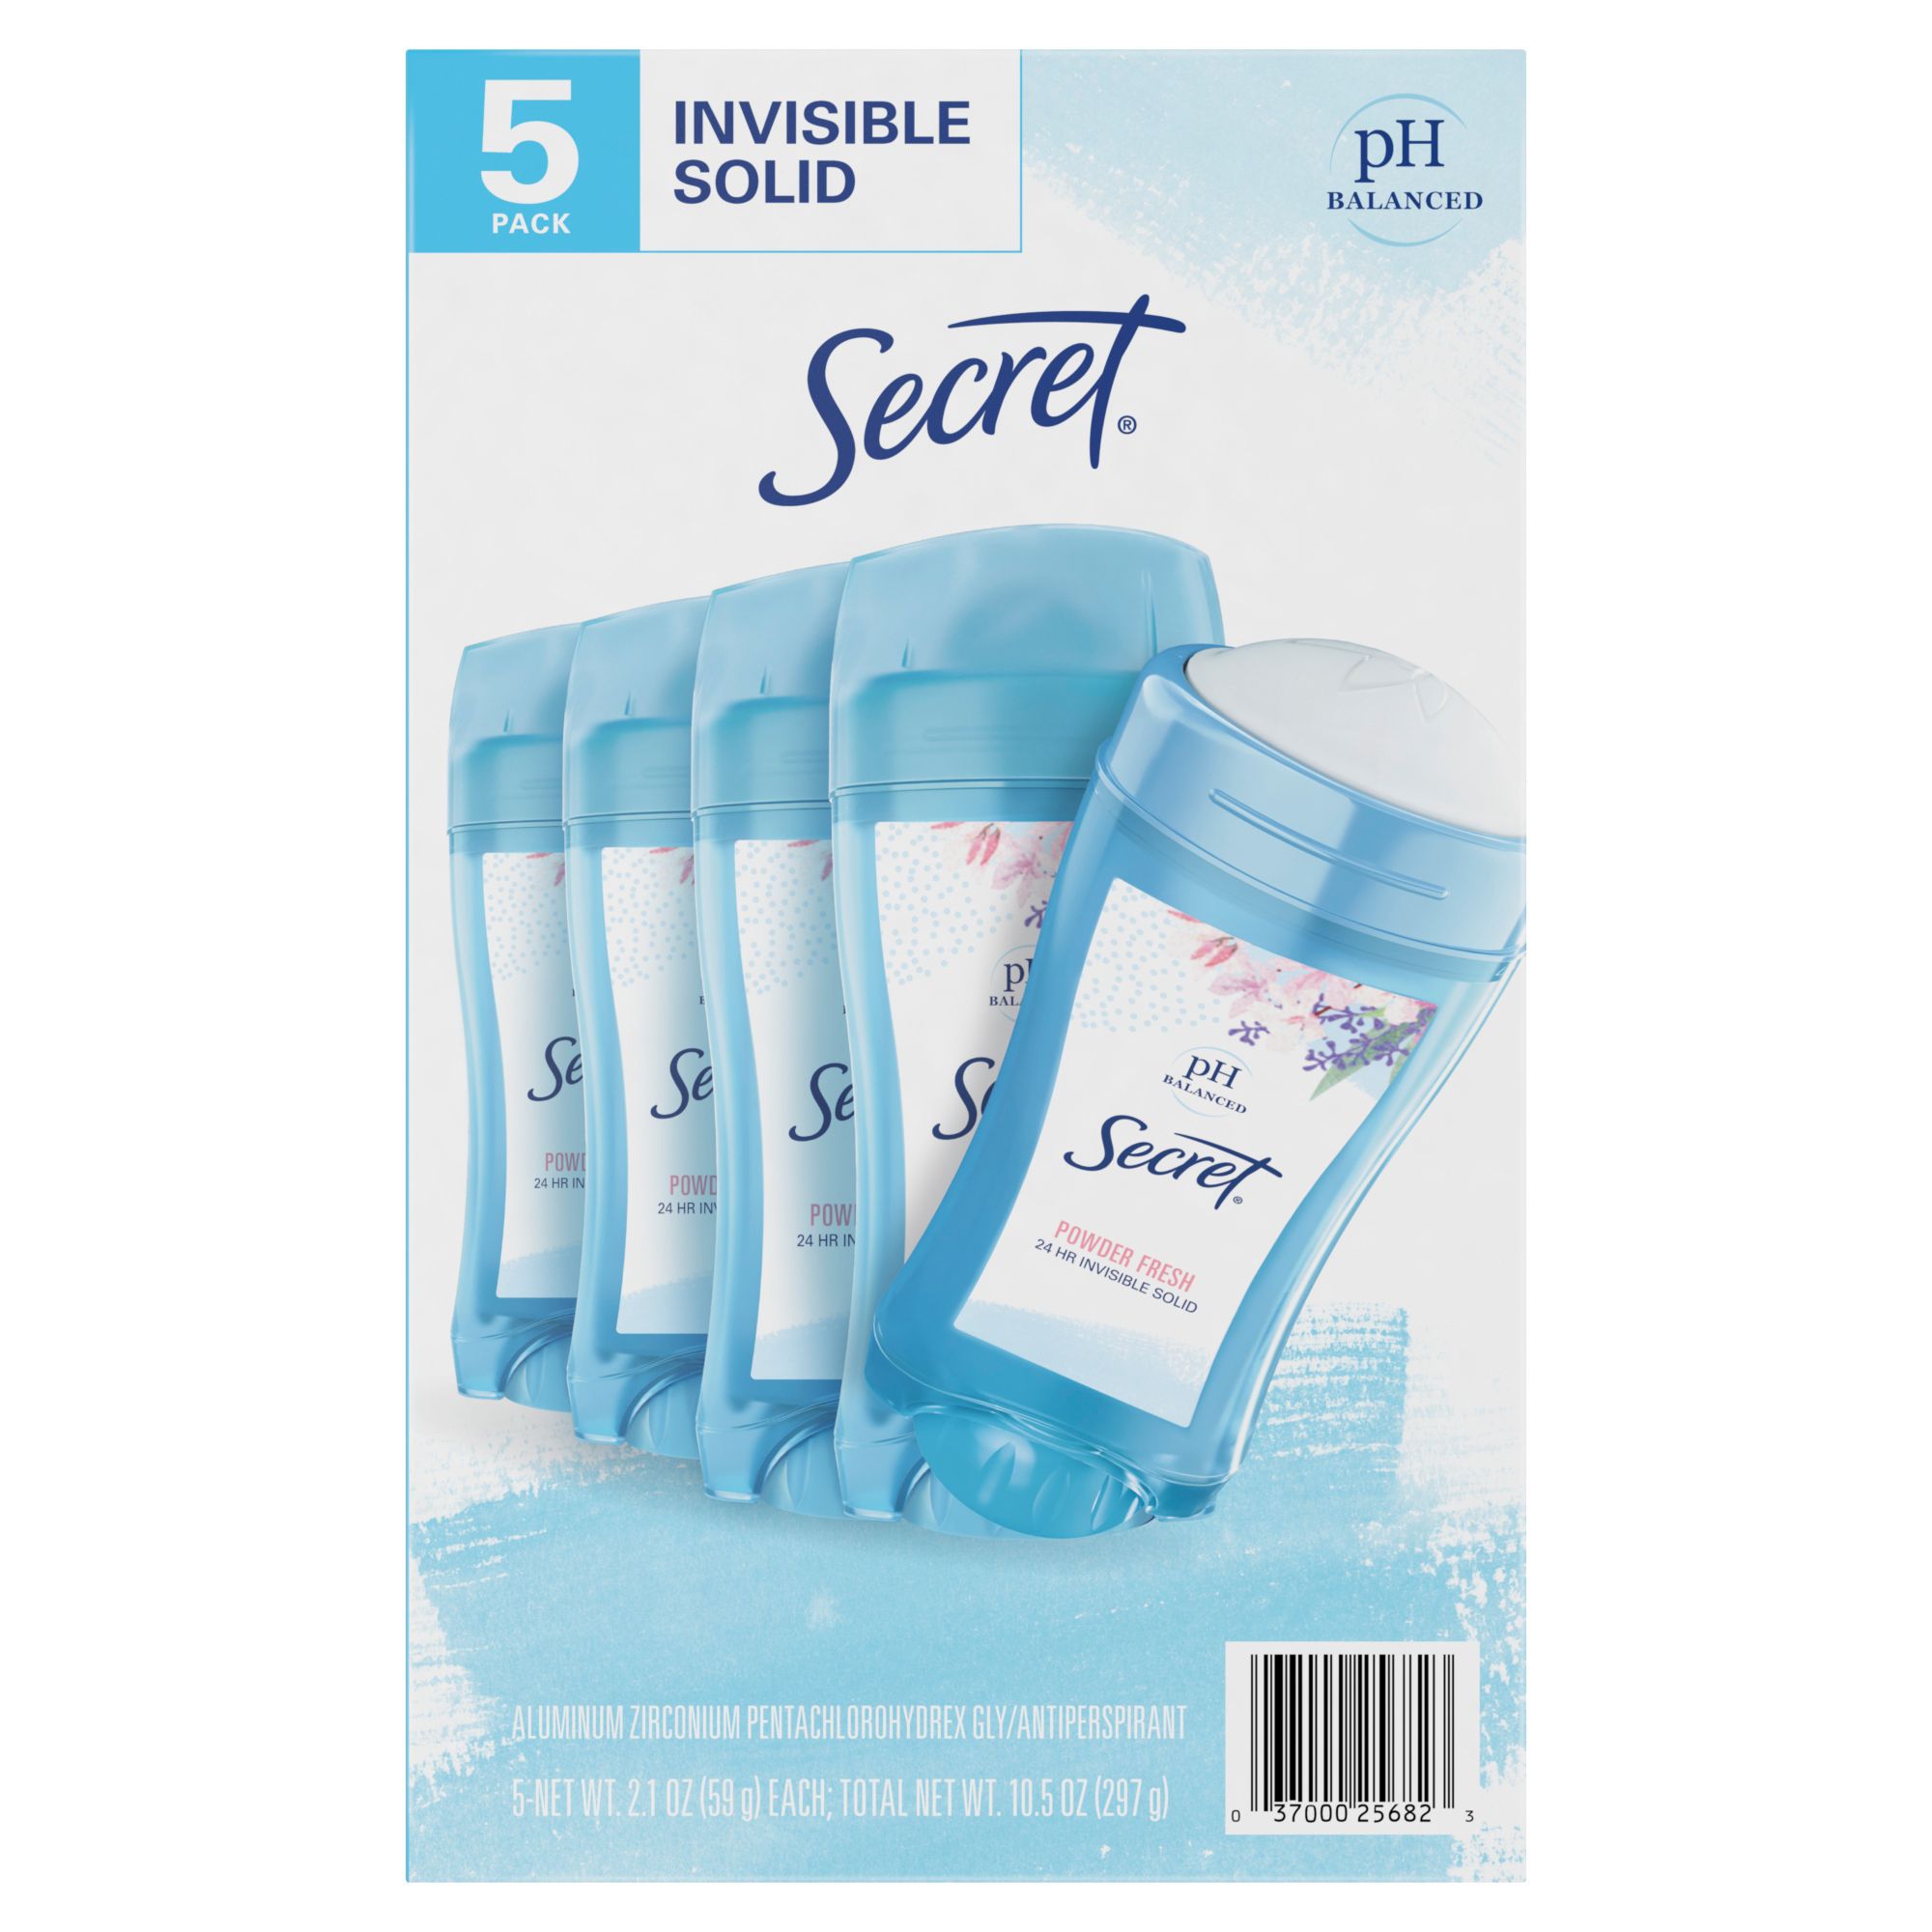 Secret Invisible Solid Antiperspirant and Deodorant Baby Powder